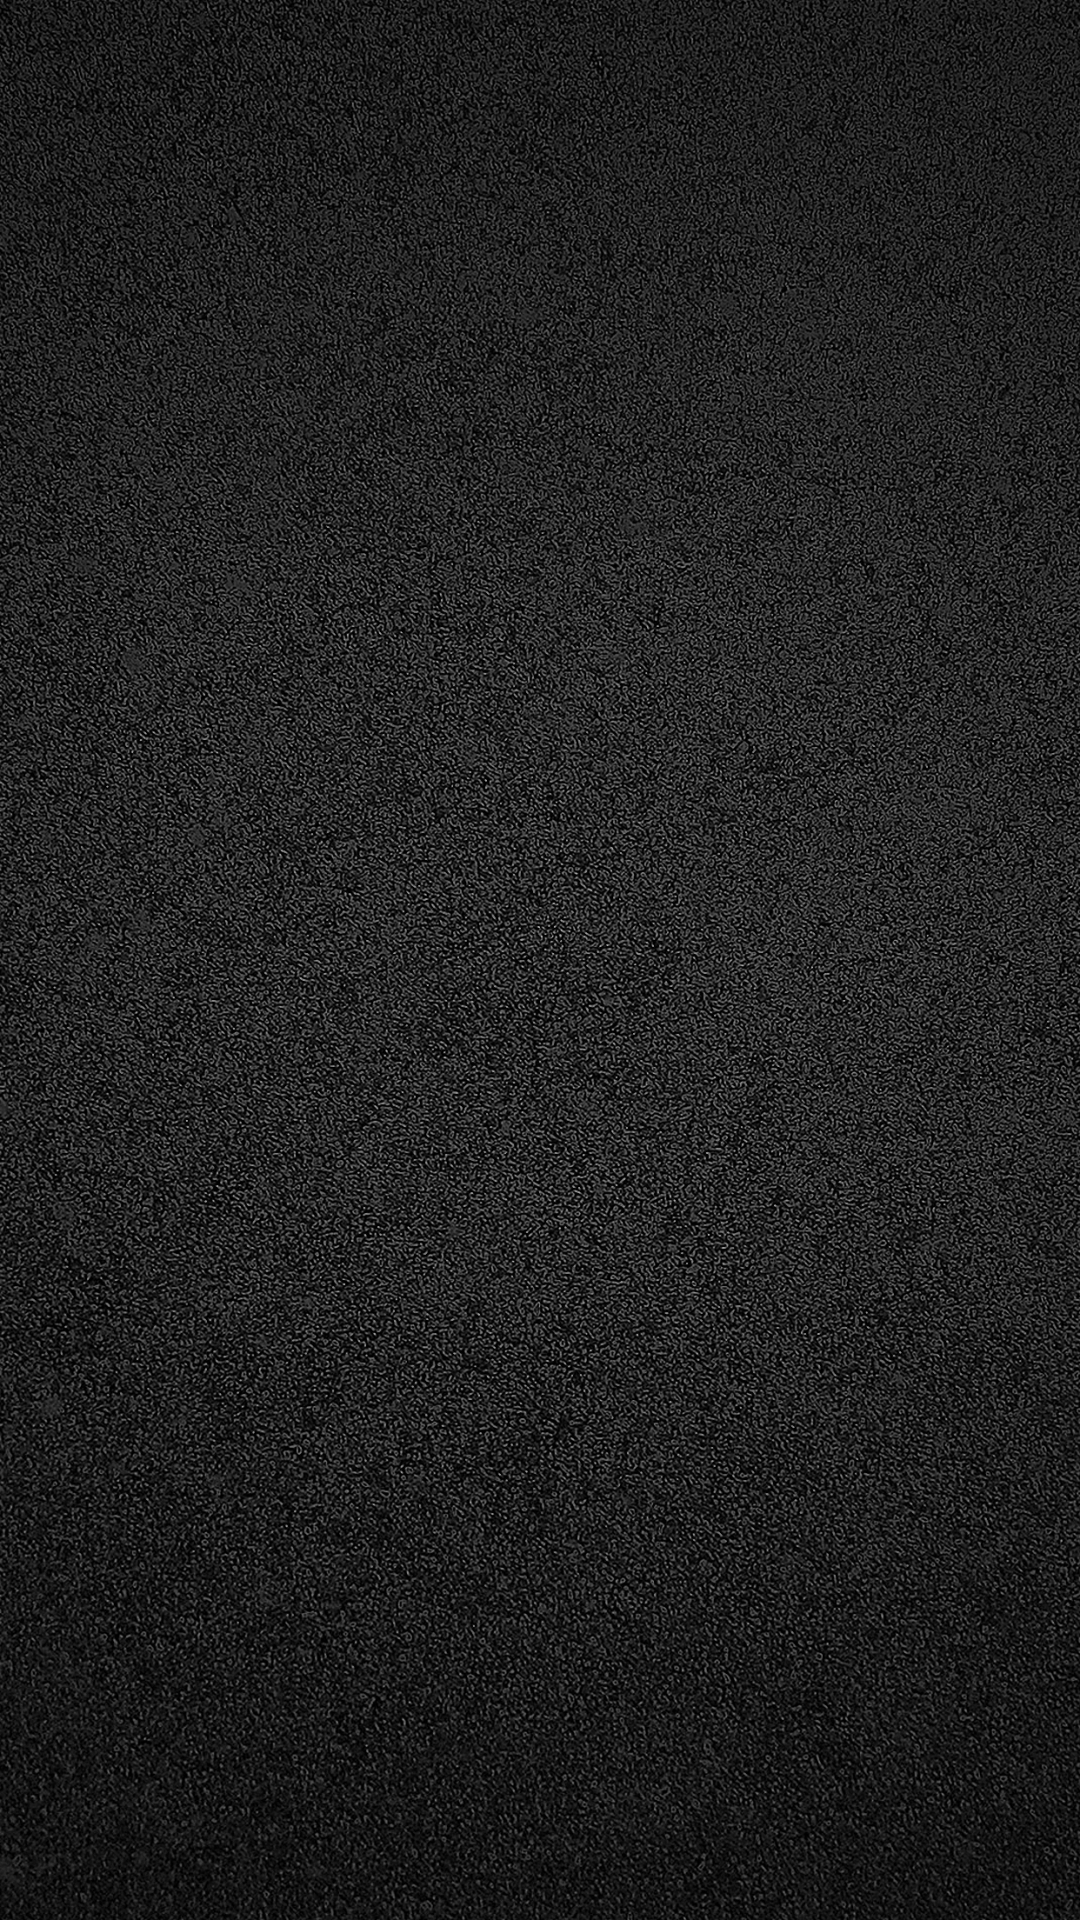 Simple Dark iPhone 6s Plus Wallpaper HD